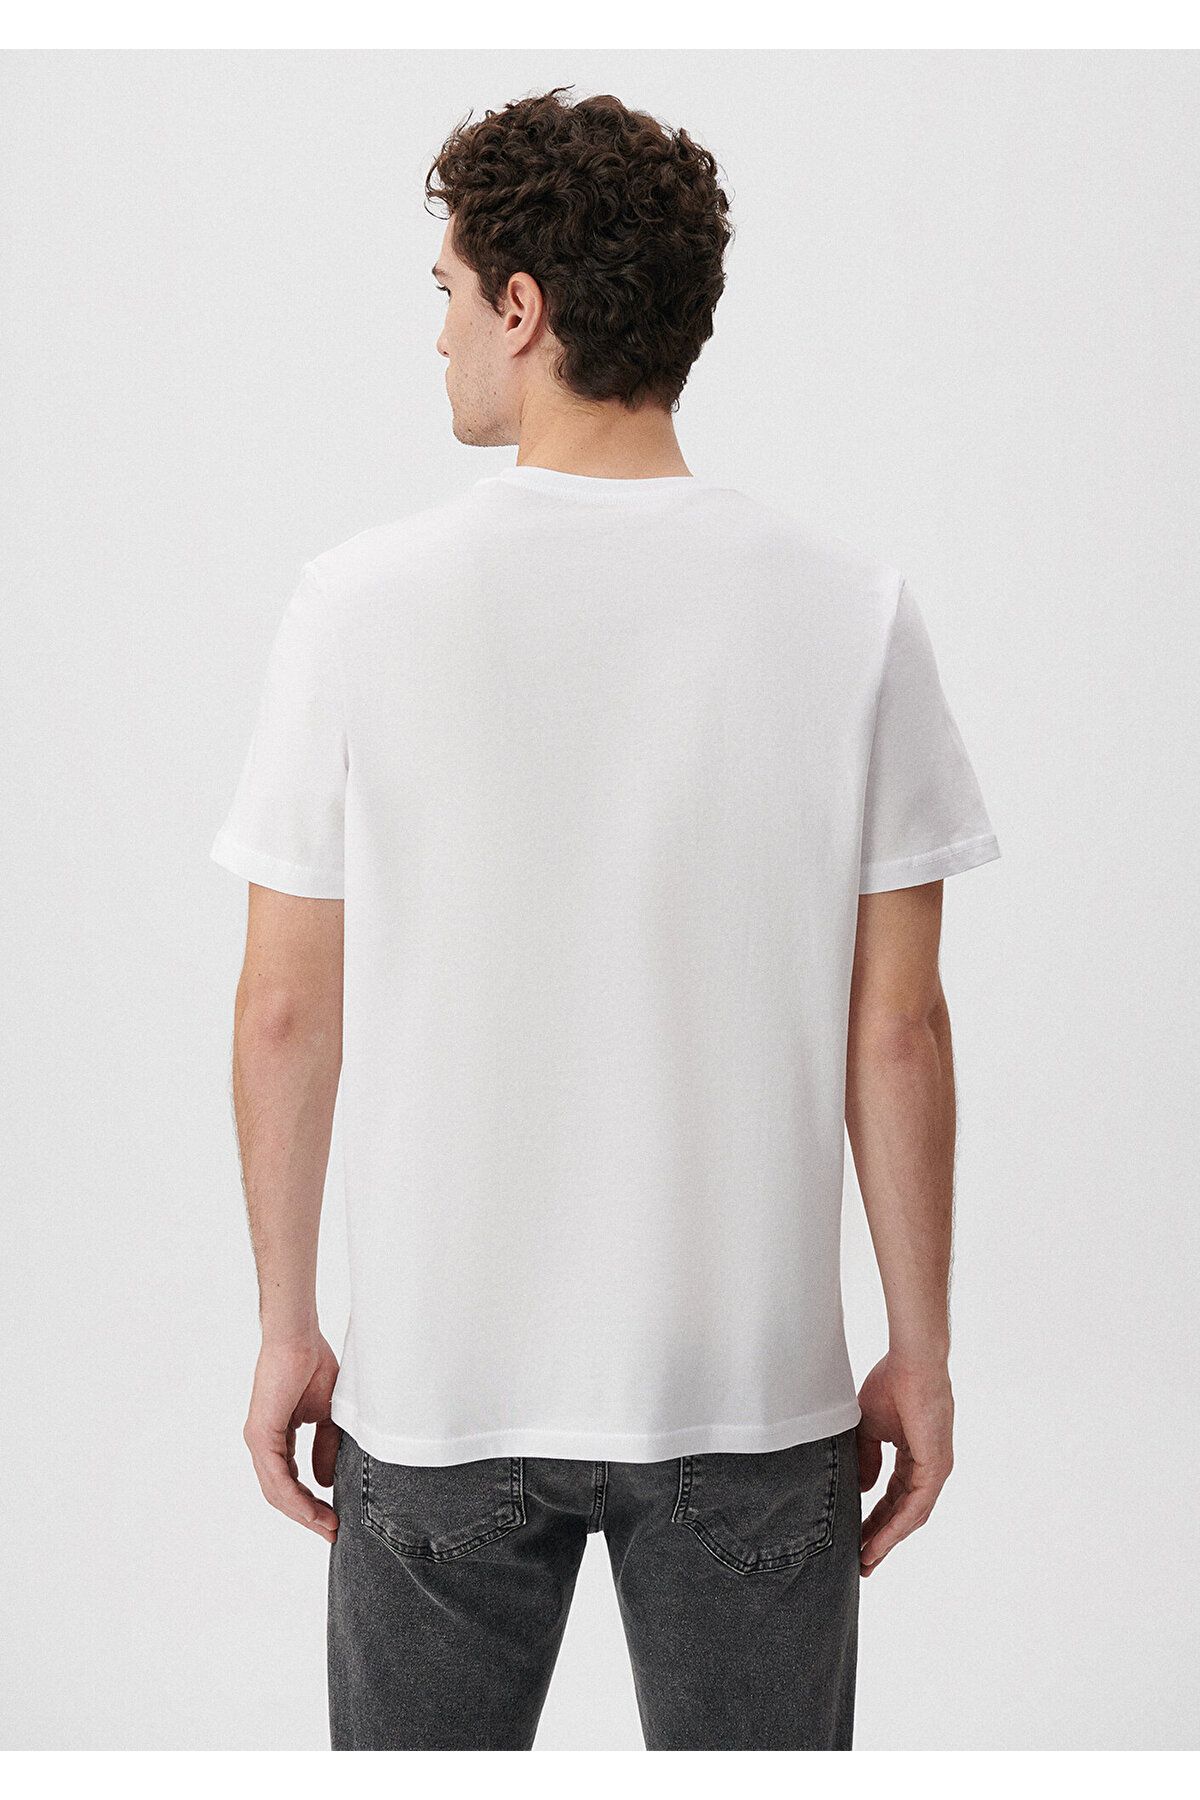 Mavi آرم چاپ شده تی شرت سفید به طور منظم / برش معمولی 0610948-620